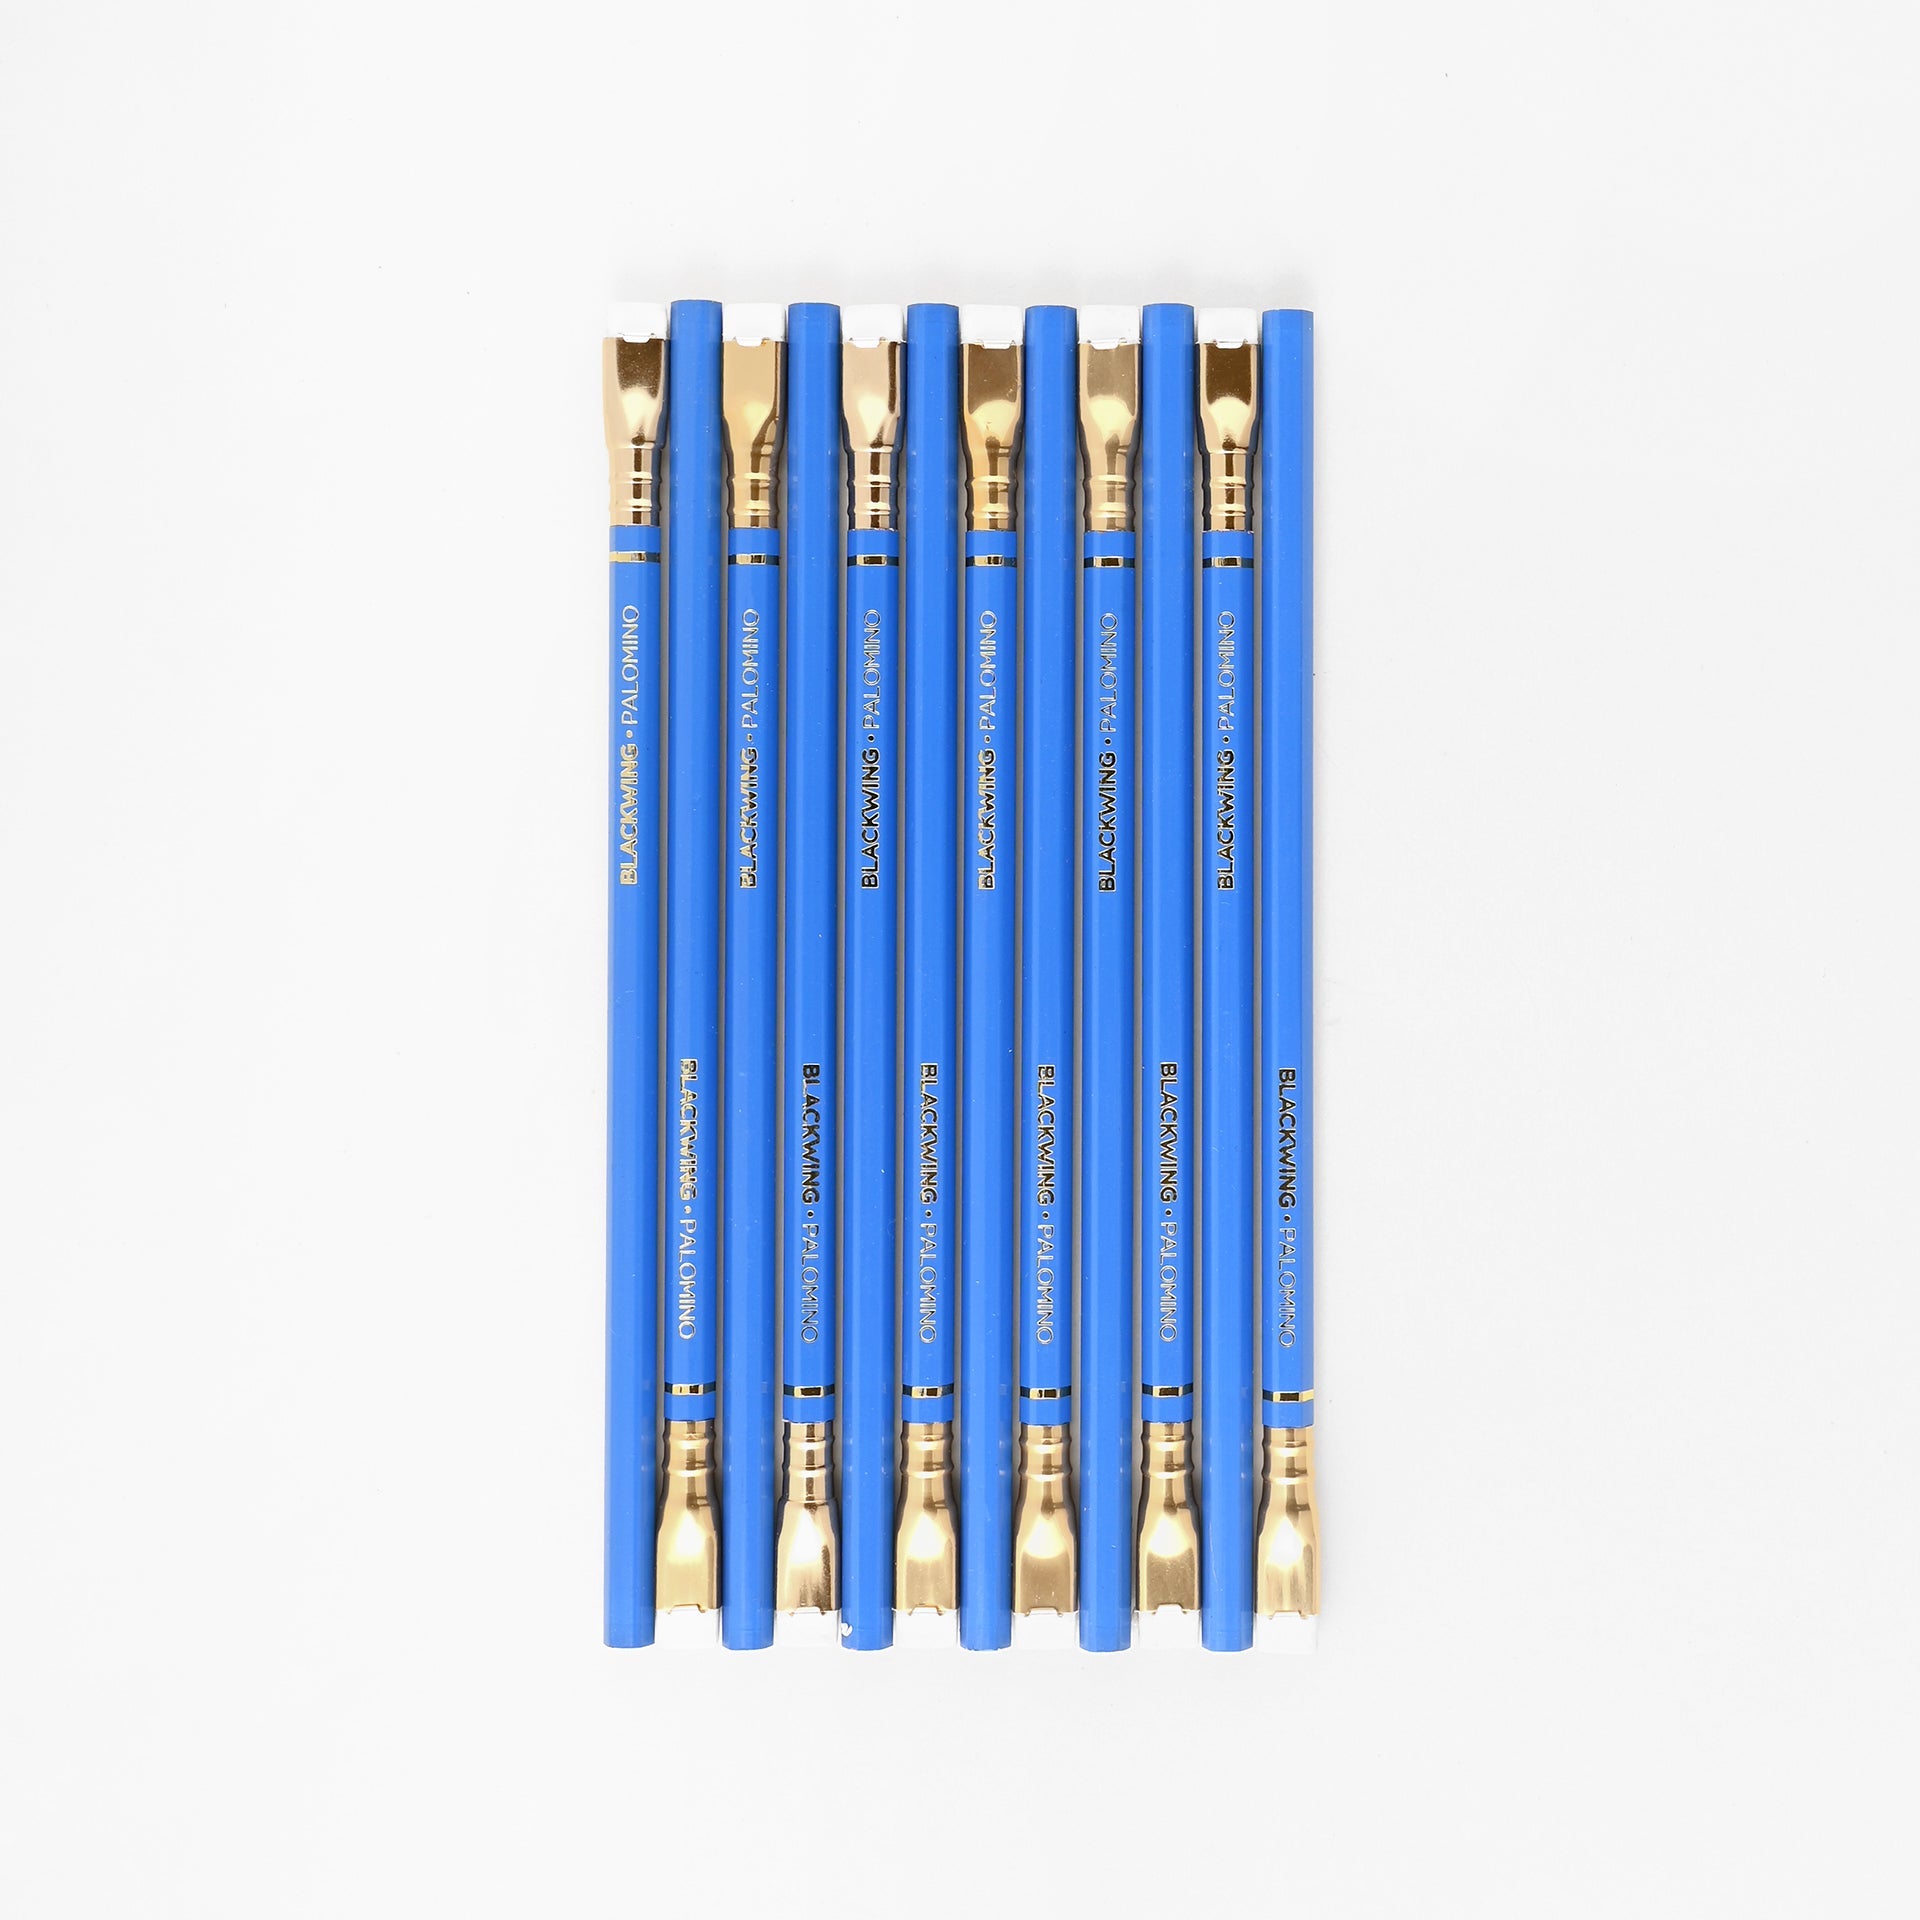 Blackwing Blackwing Eras Palomino Blue Pencils Box of Twelve Limited Edition 